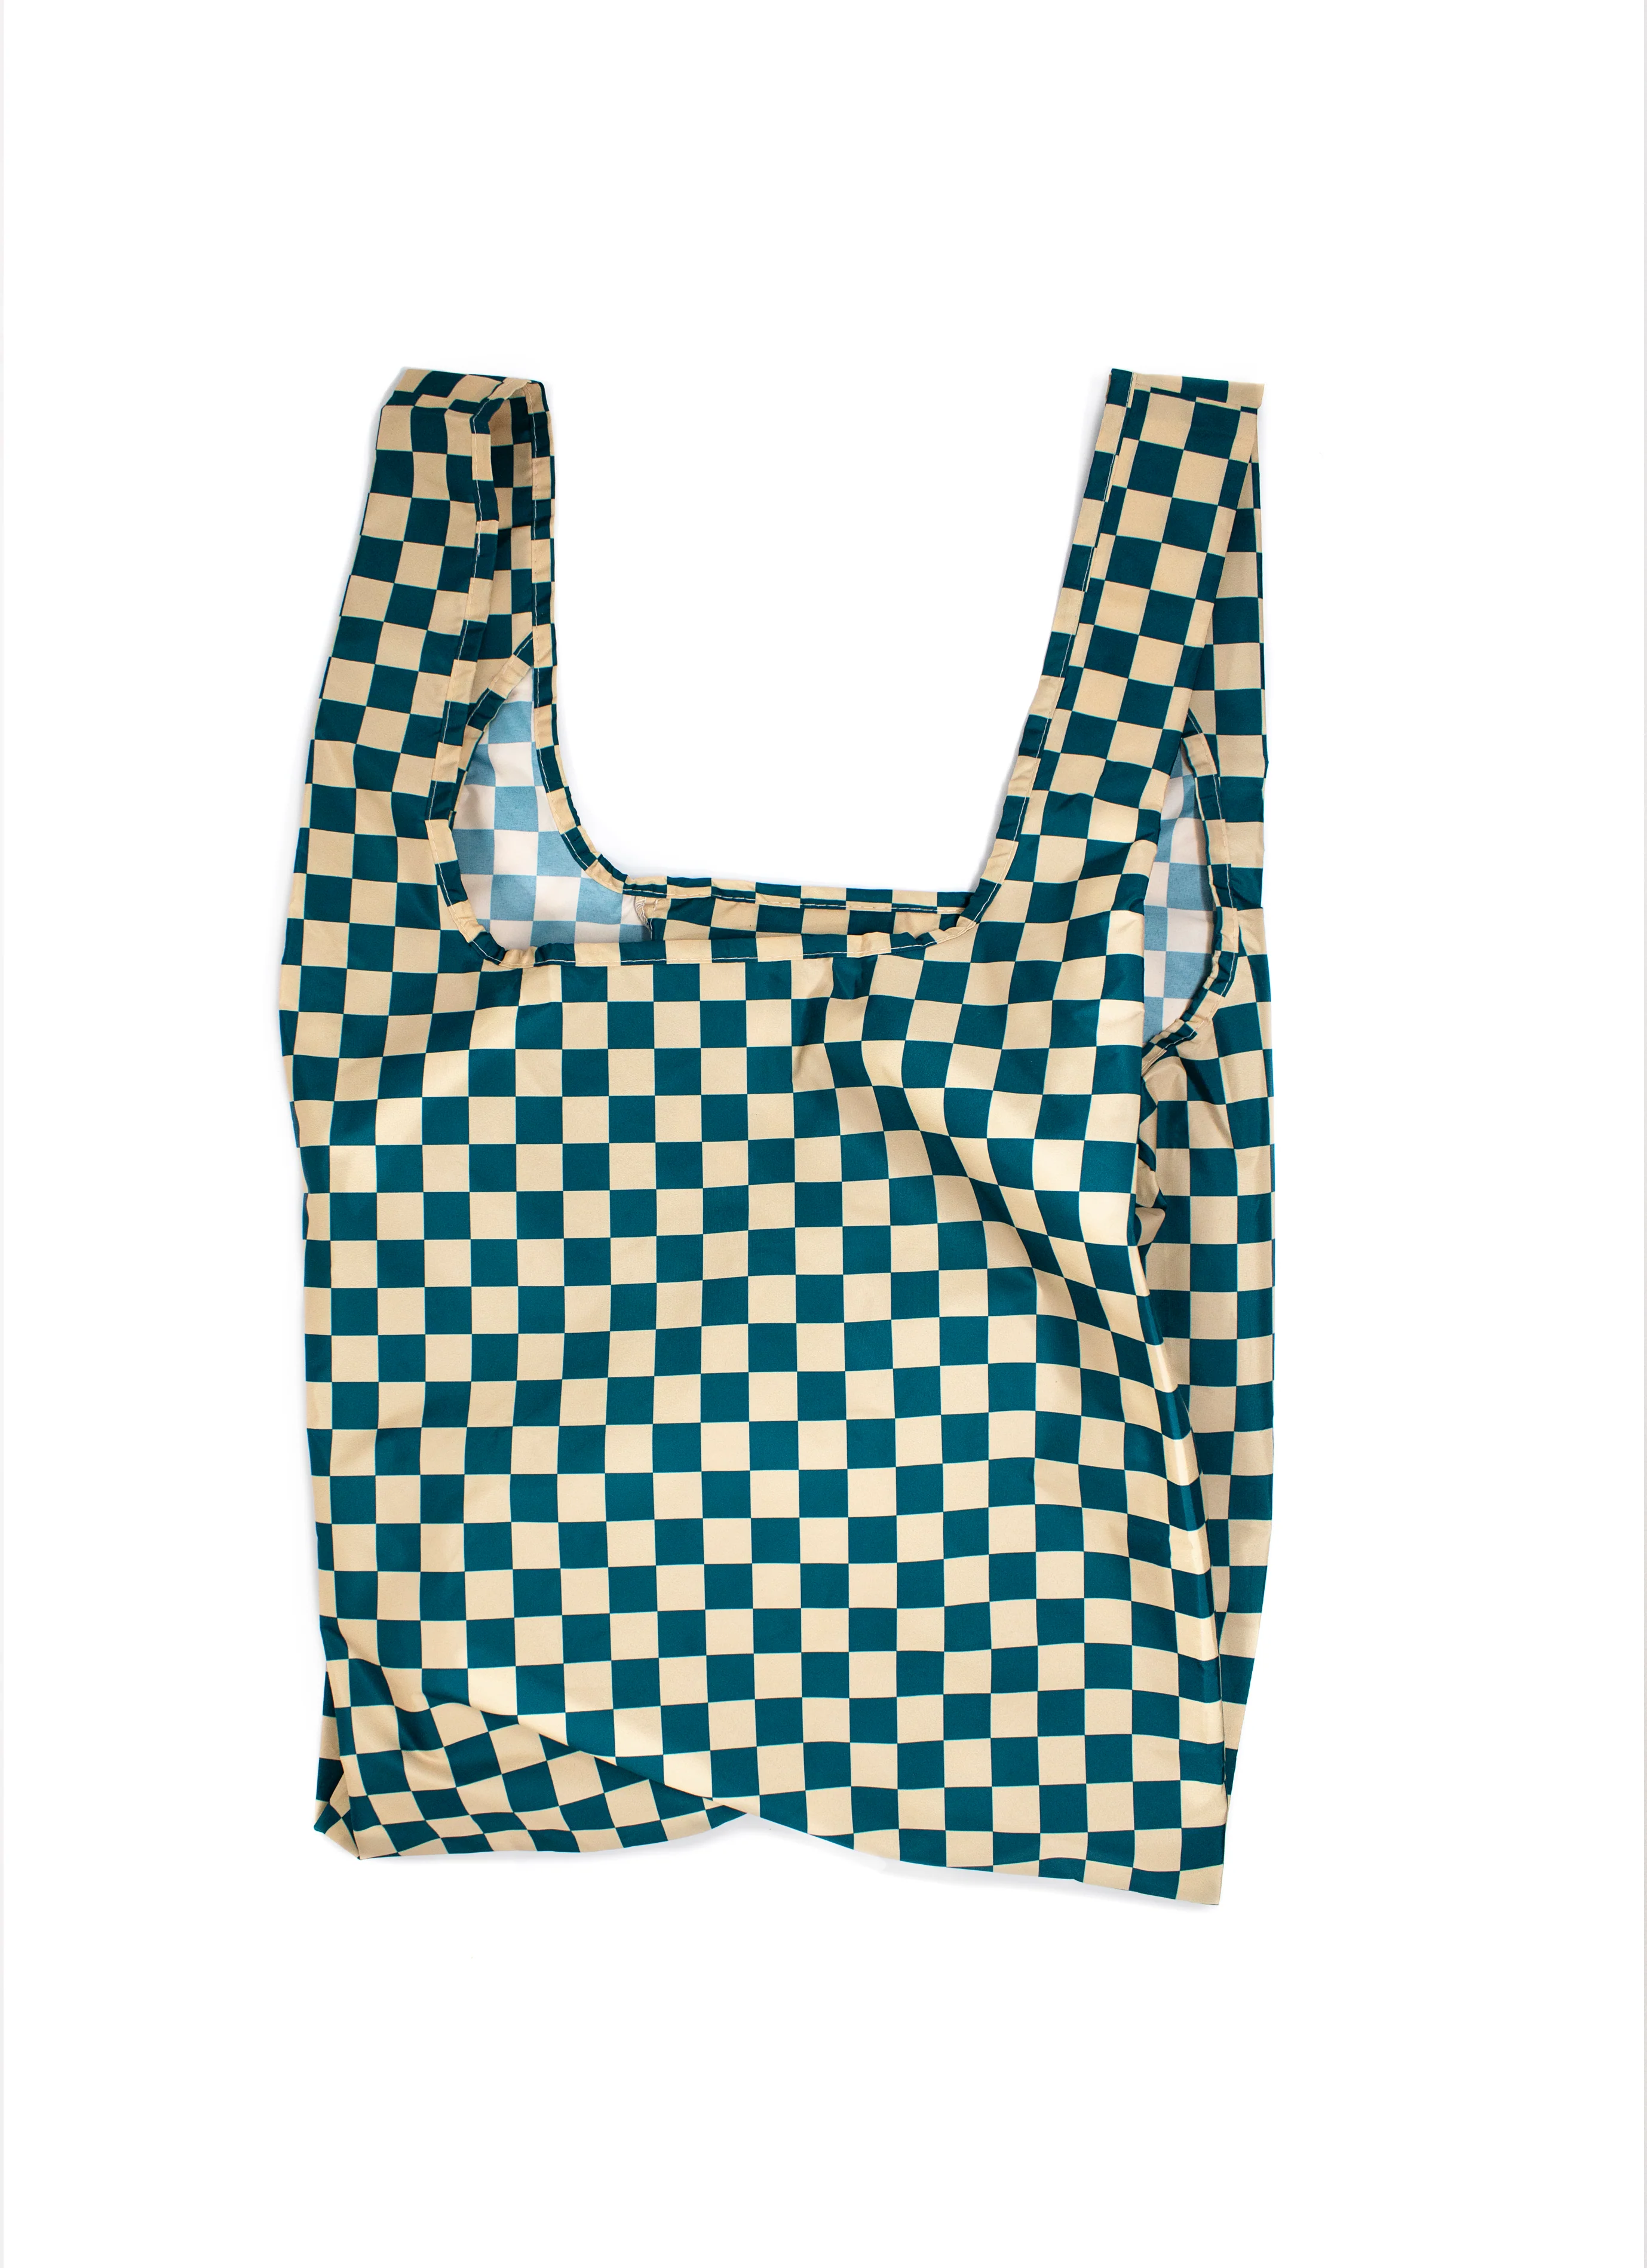 kind-bag-reusable-medium-shopping-bag-teal-checkerboard